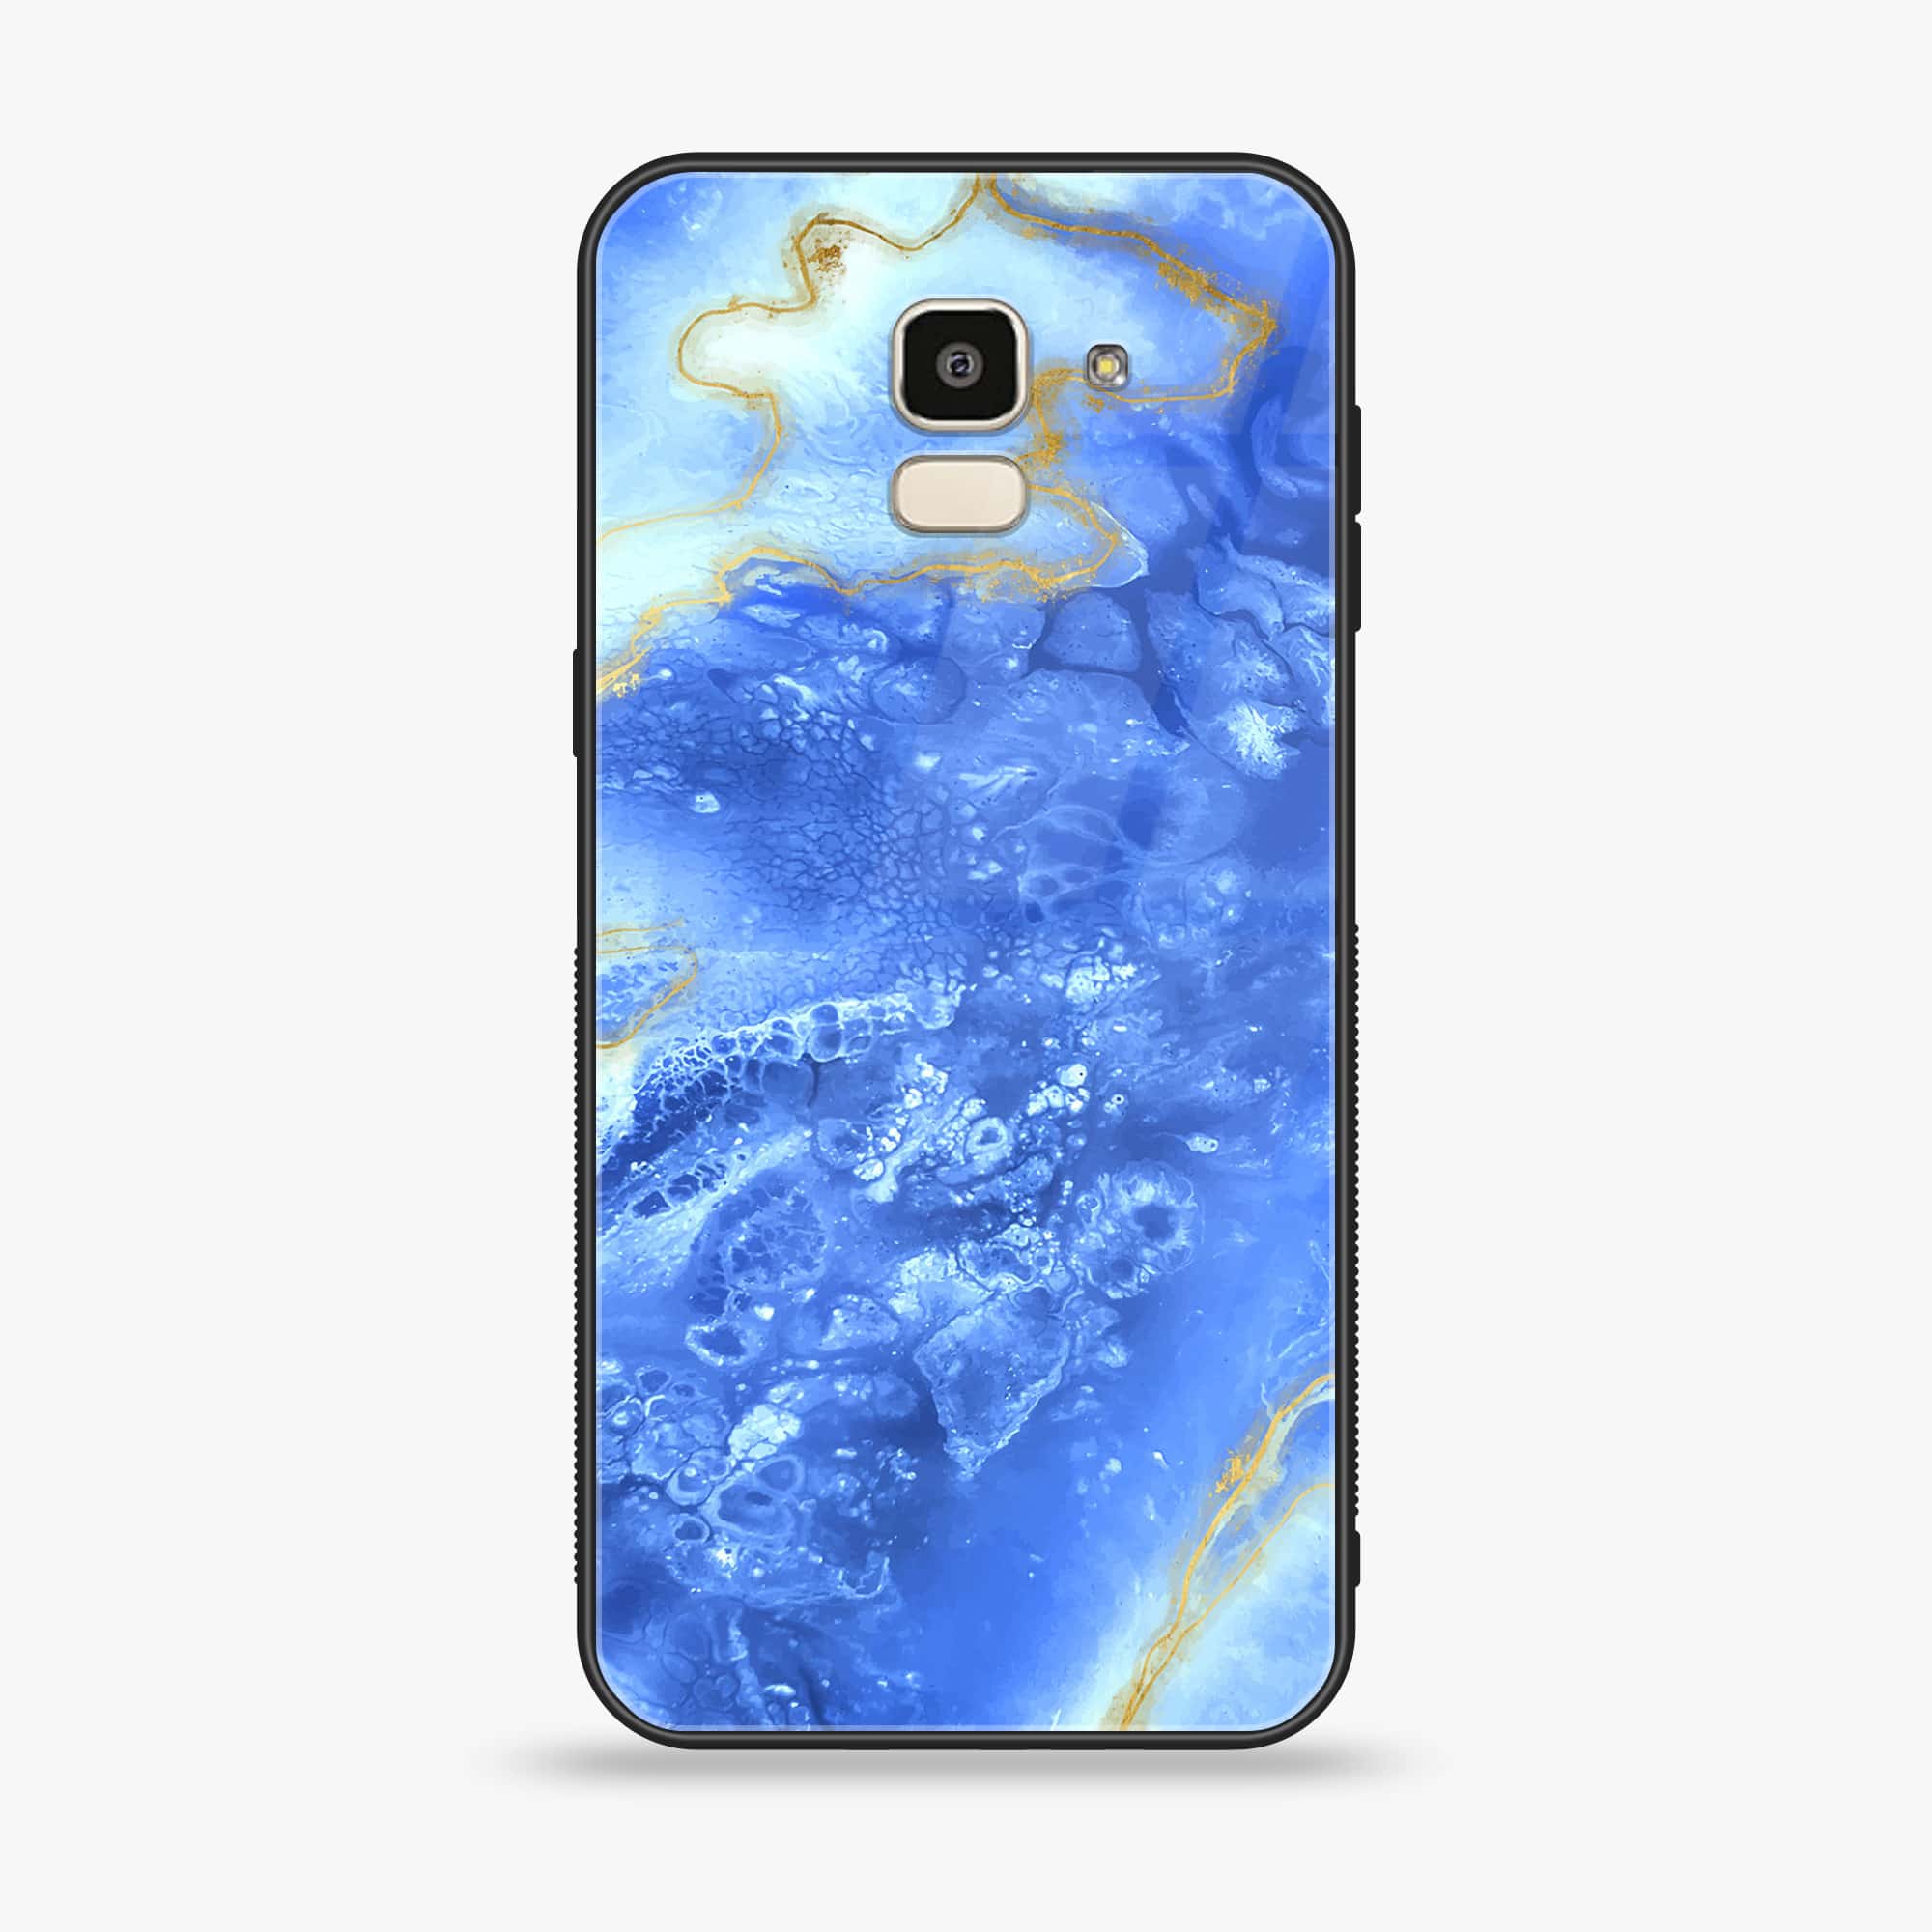 Samsung Galaxy J6 (2018) - Blue Marble 2.0 Series - Premium Printed Glass soft Bumper shock Proof Case